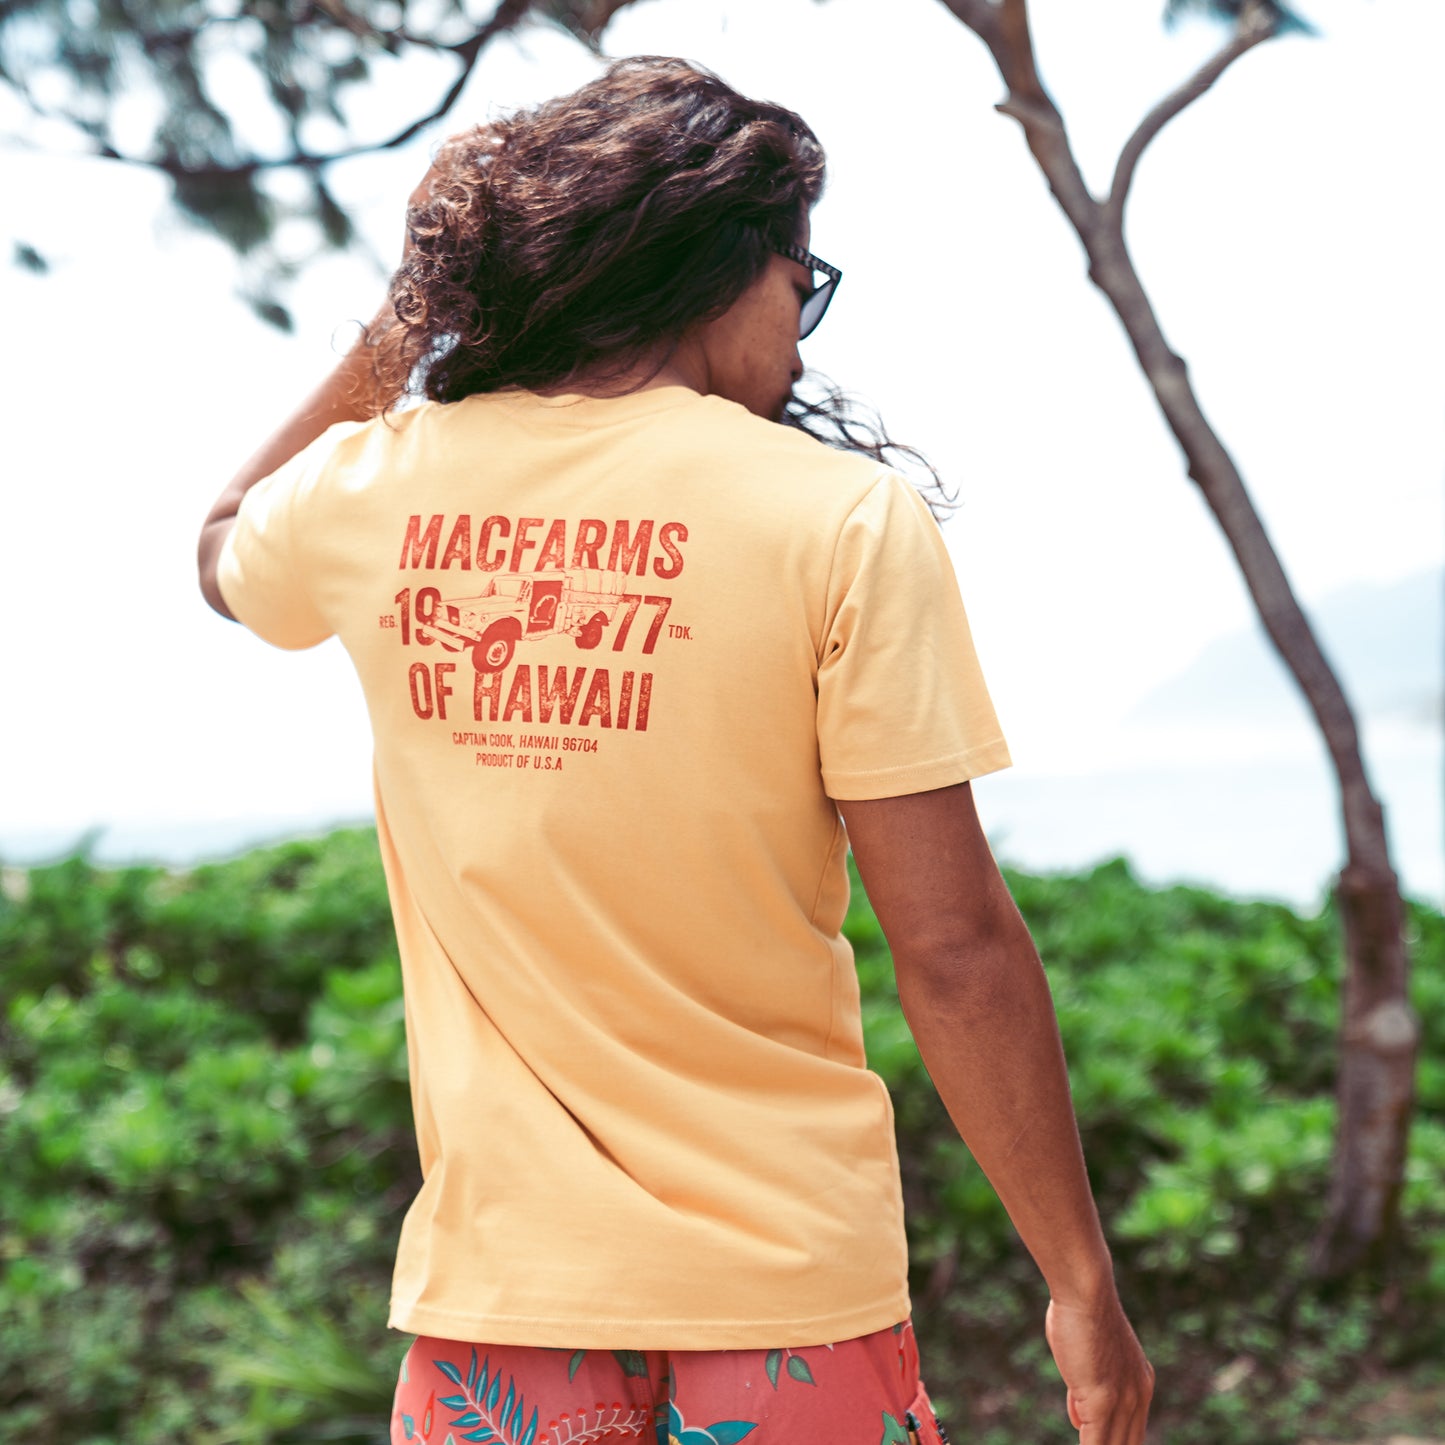 man wearing mustard t-shirt with "mac farms of hawaii" truck graphic